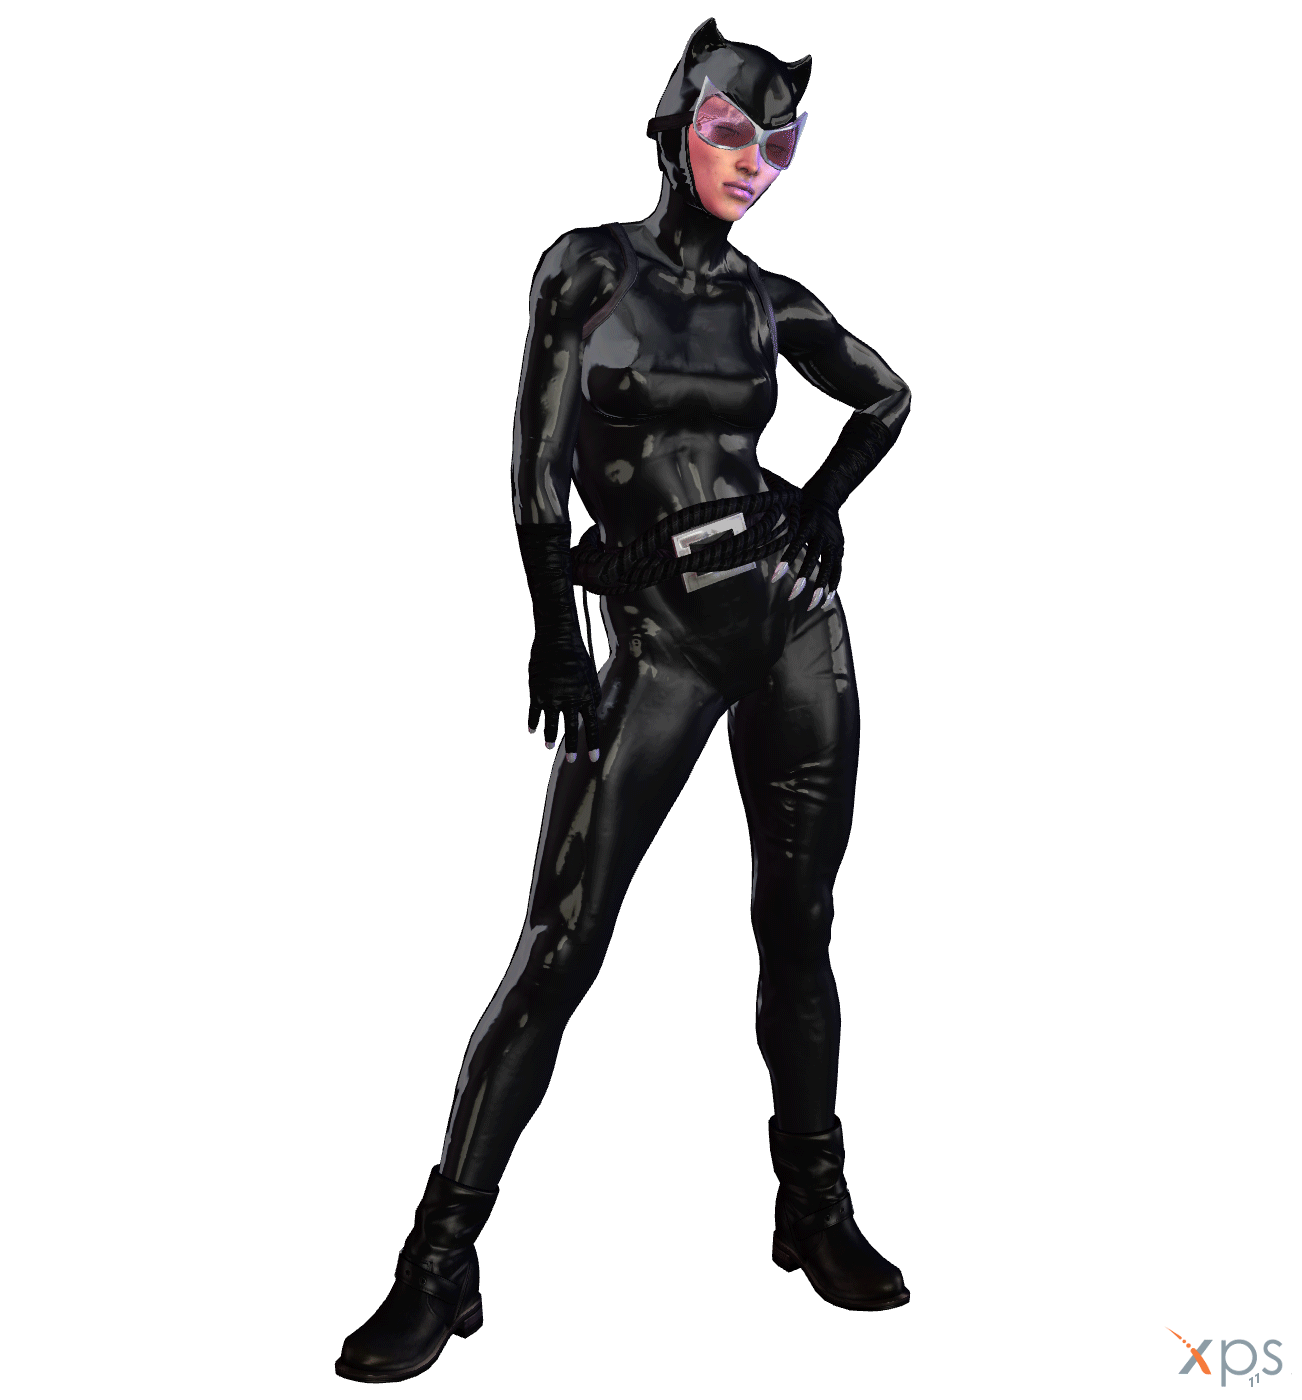 Catwoman (Z-9623) by MrUncleBingo on DeviantArt